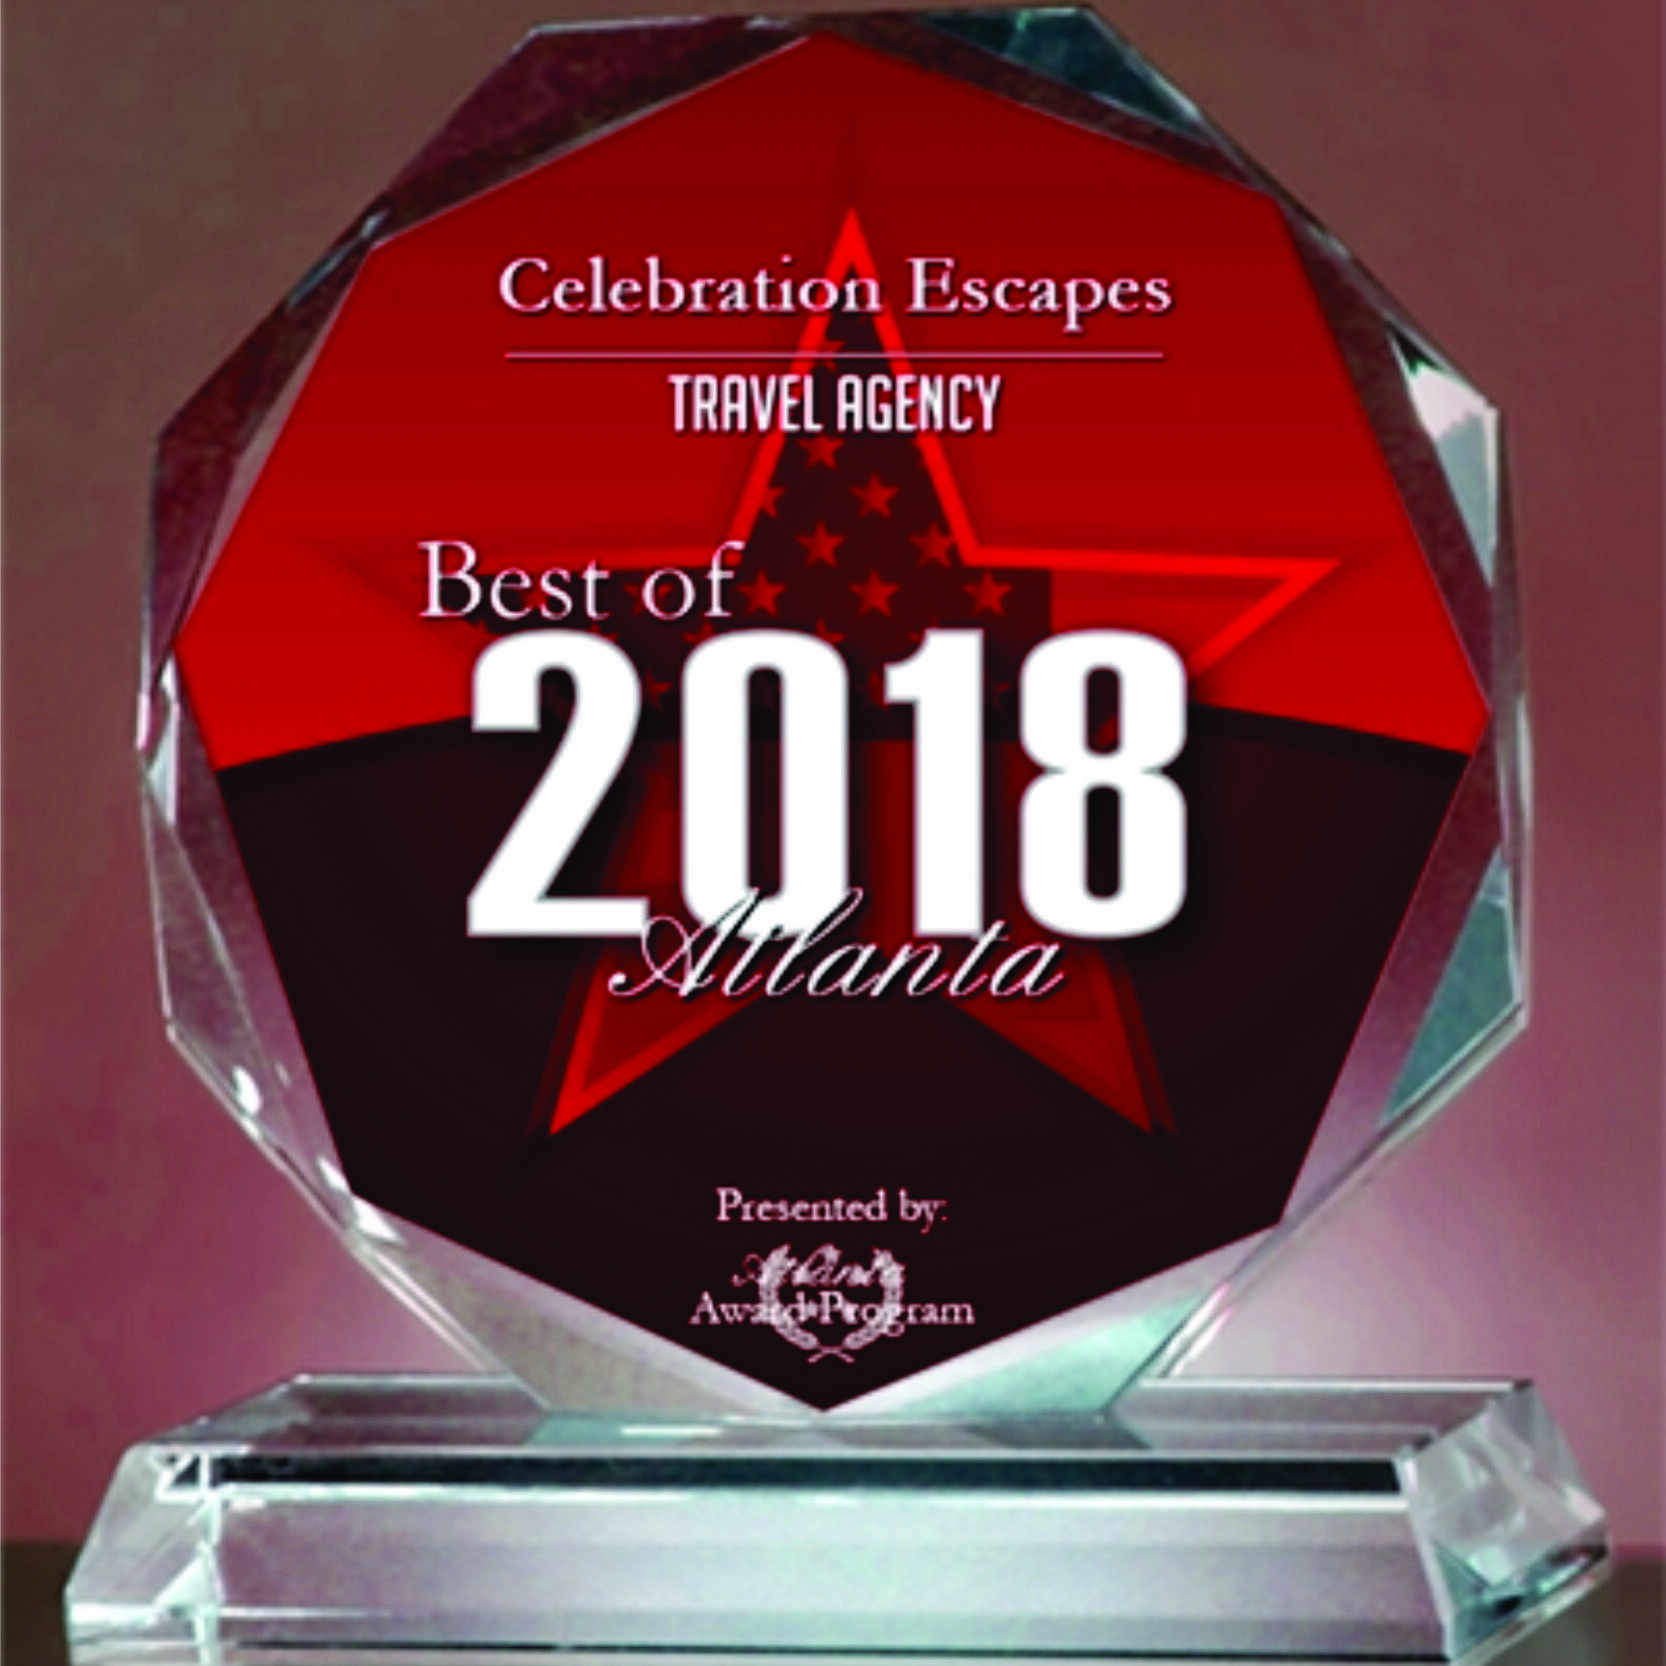 best-of-atlanta-2018-red-crystal-award-1666x